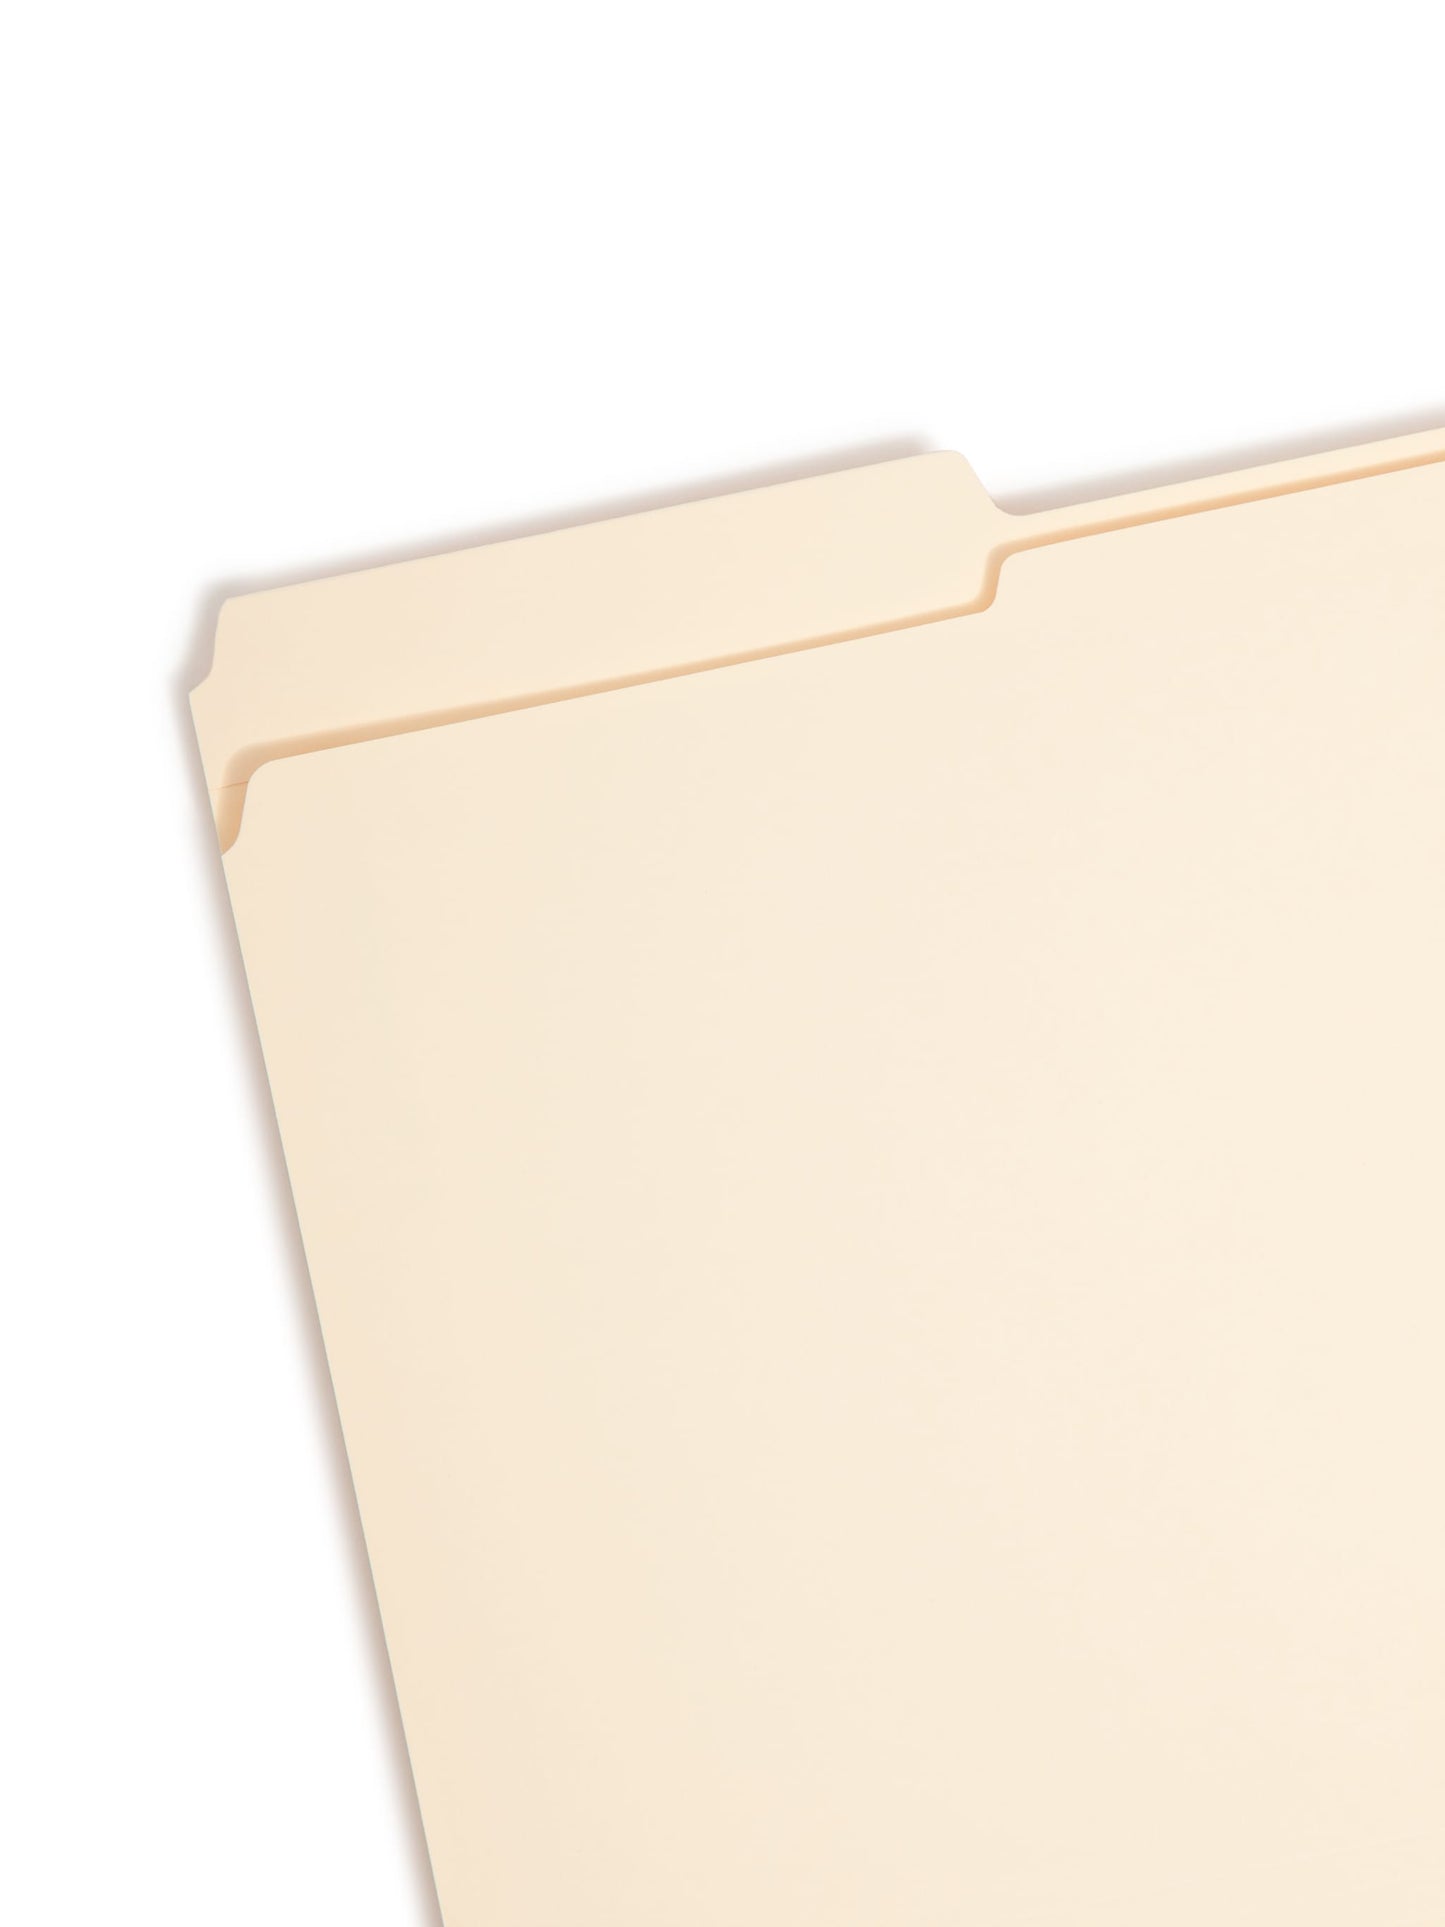 Reinforced Tab Fastener File Folders, 1/3-Cut Tab, 1 Fastener, Manila Color, Legal Size, Set of 50, 086486195348